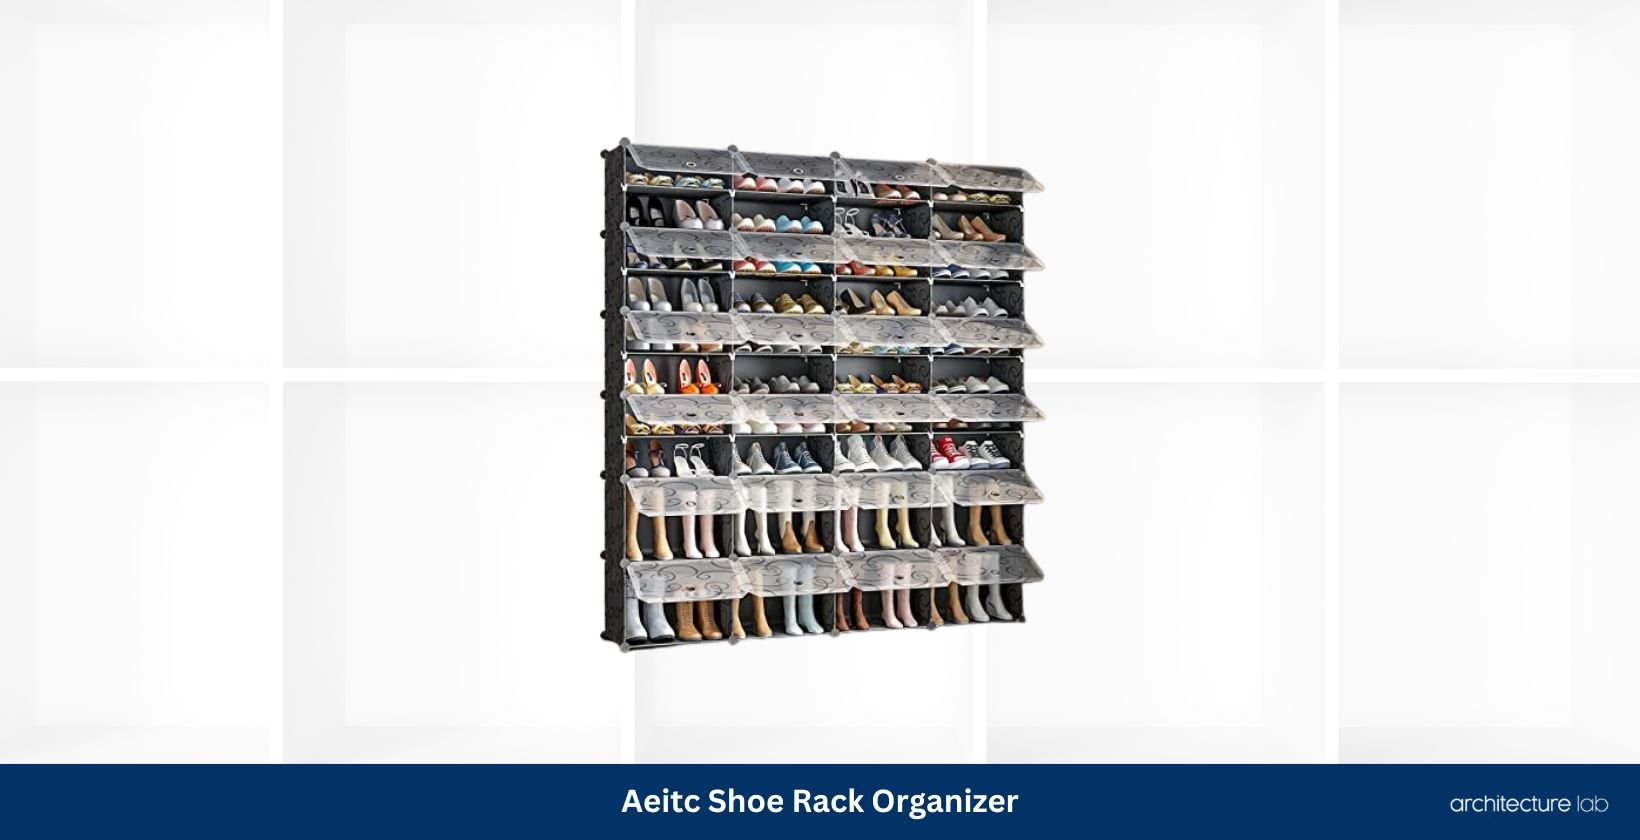 Aeitc shoe rack organizer